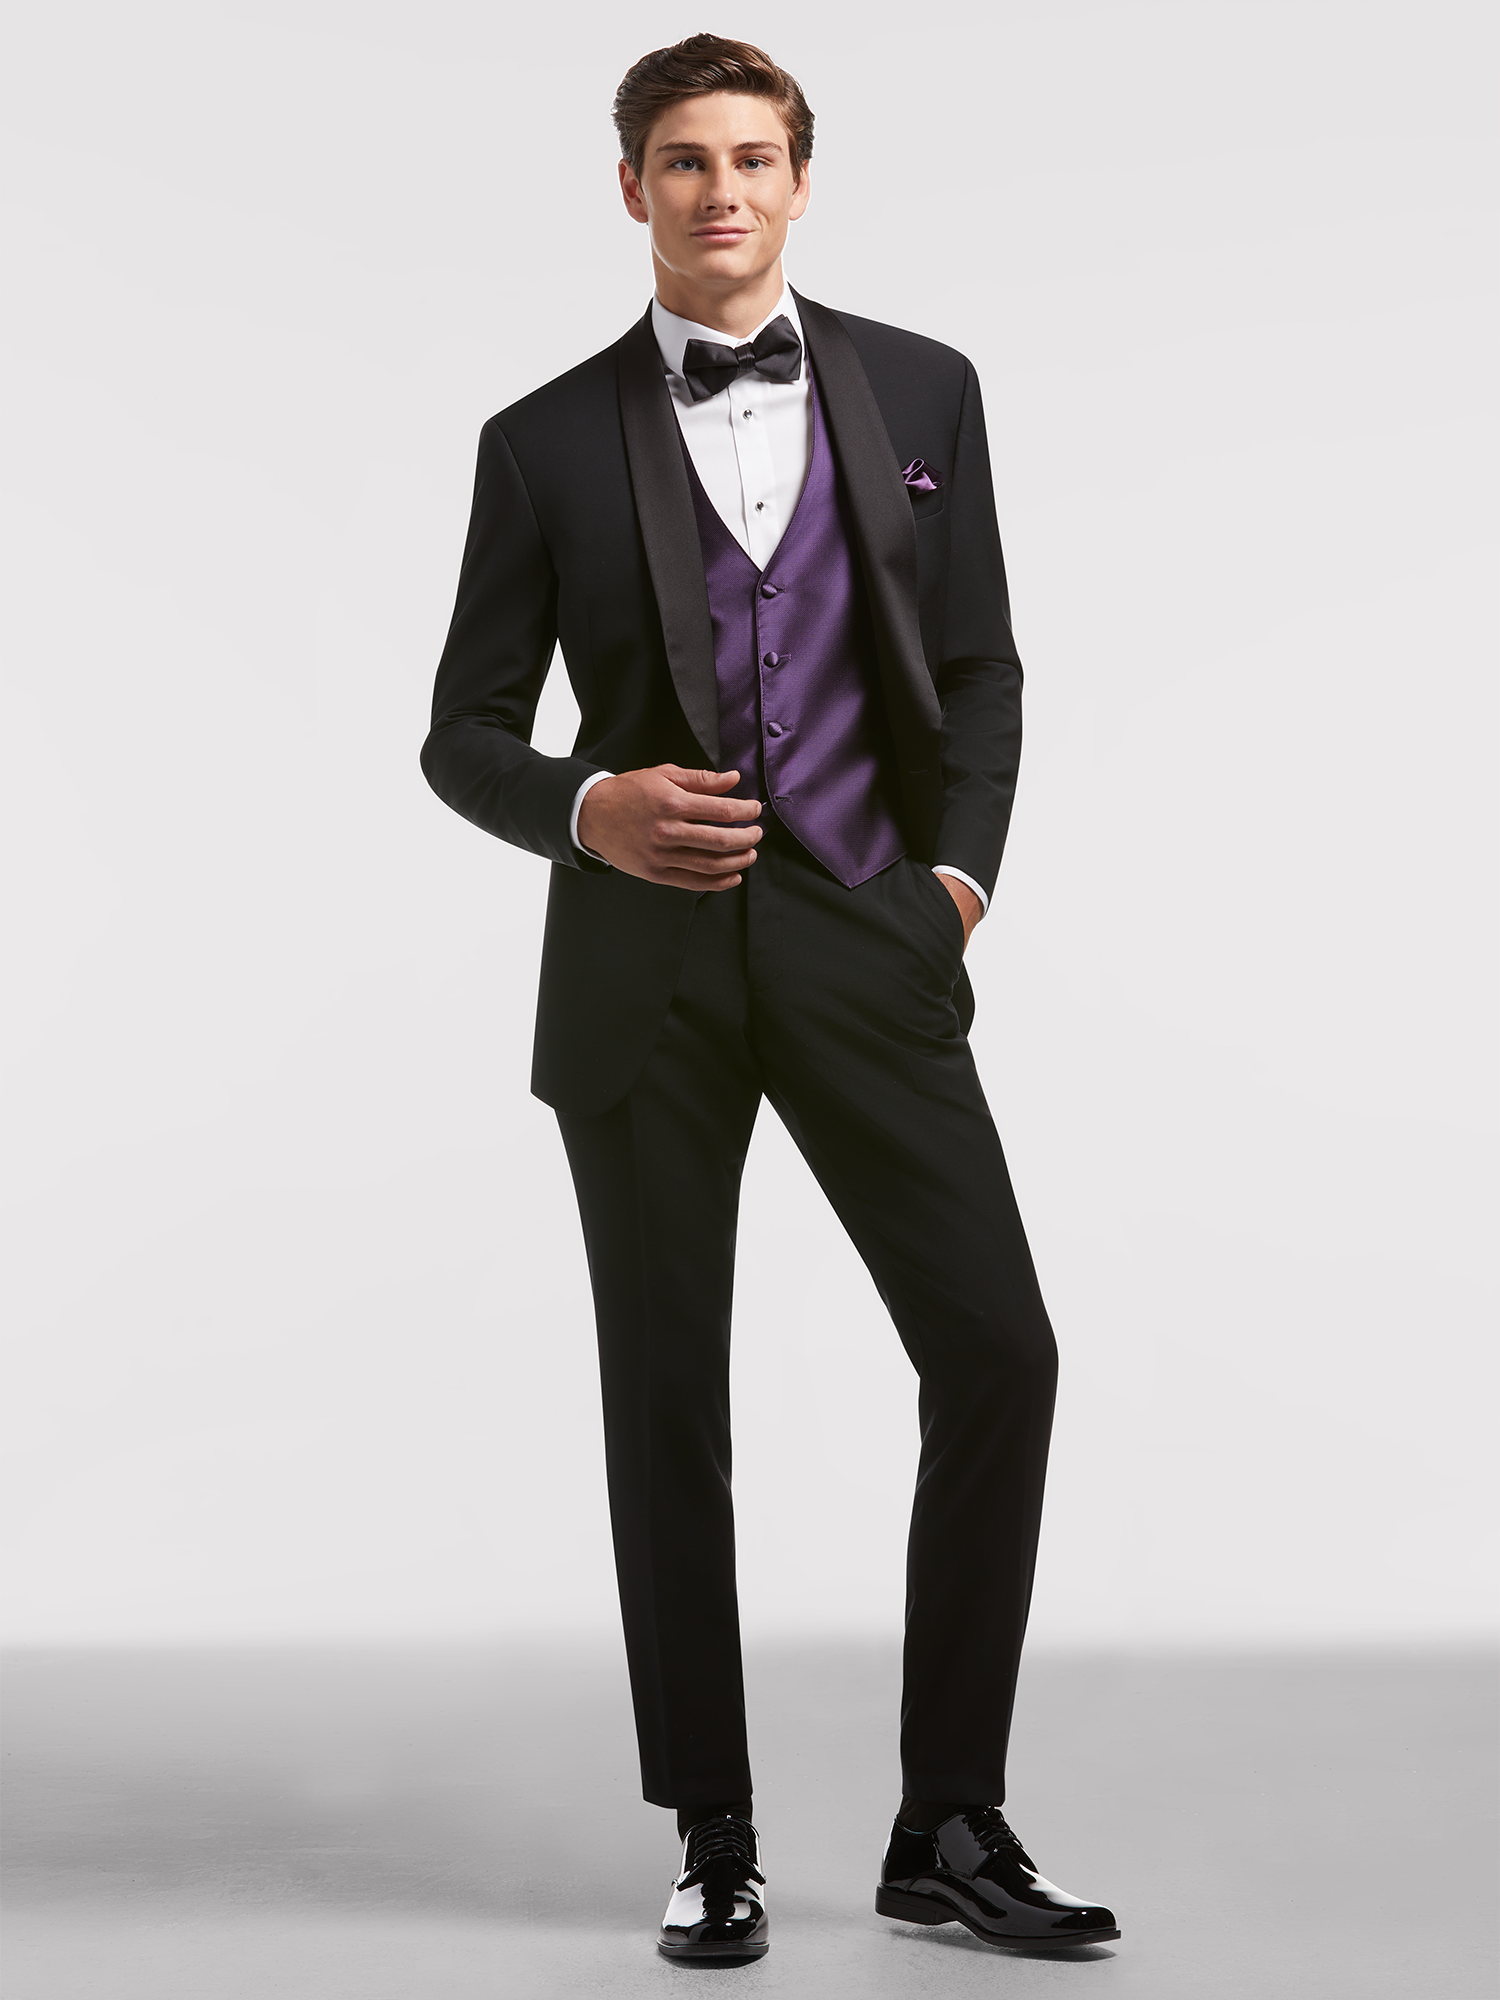 Grad Tuxedo Rental Styles, grad Suit Looks | Moores Clothing